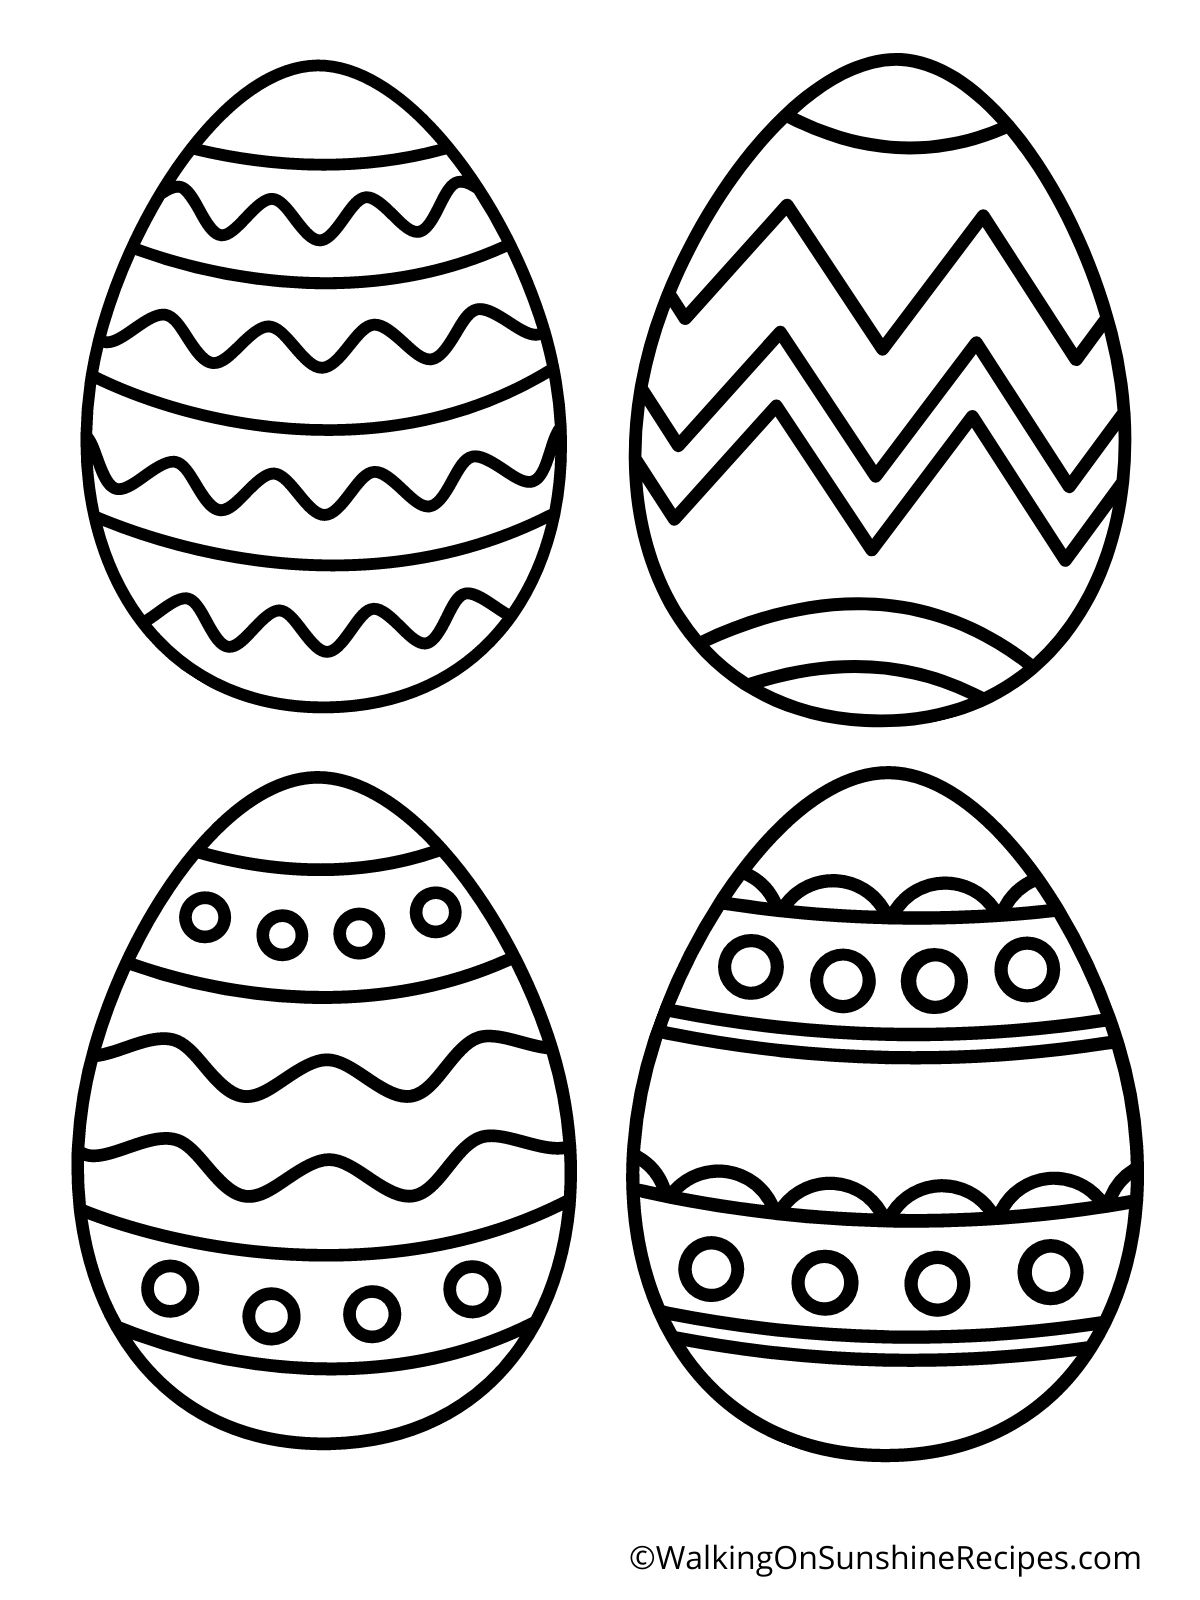 Easter Egg Design Templates. 